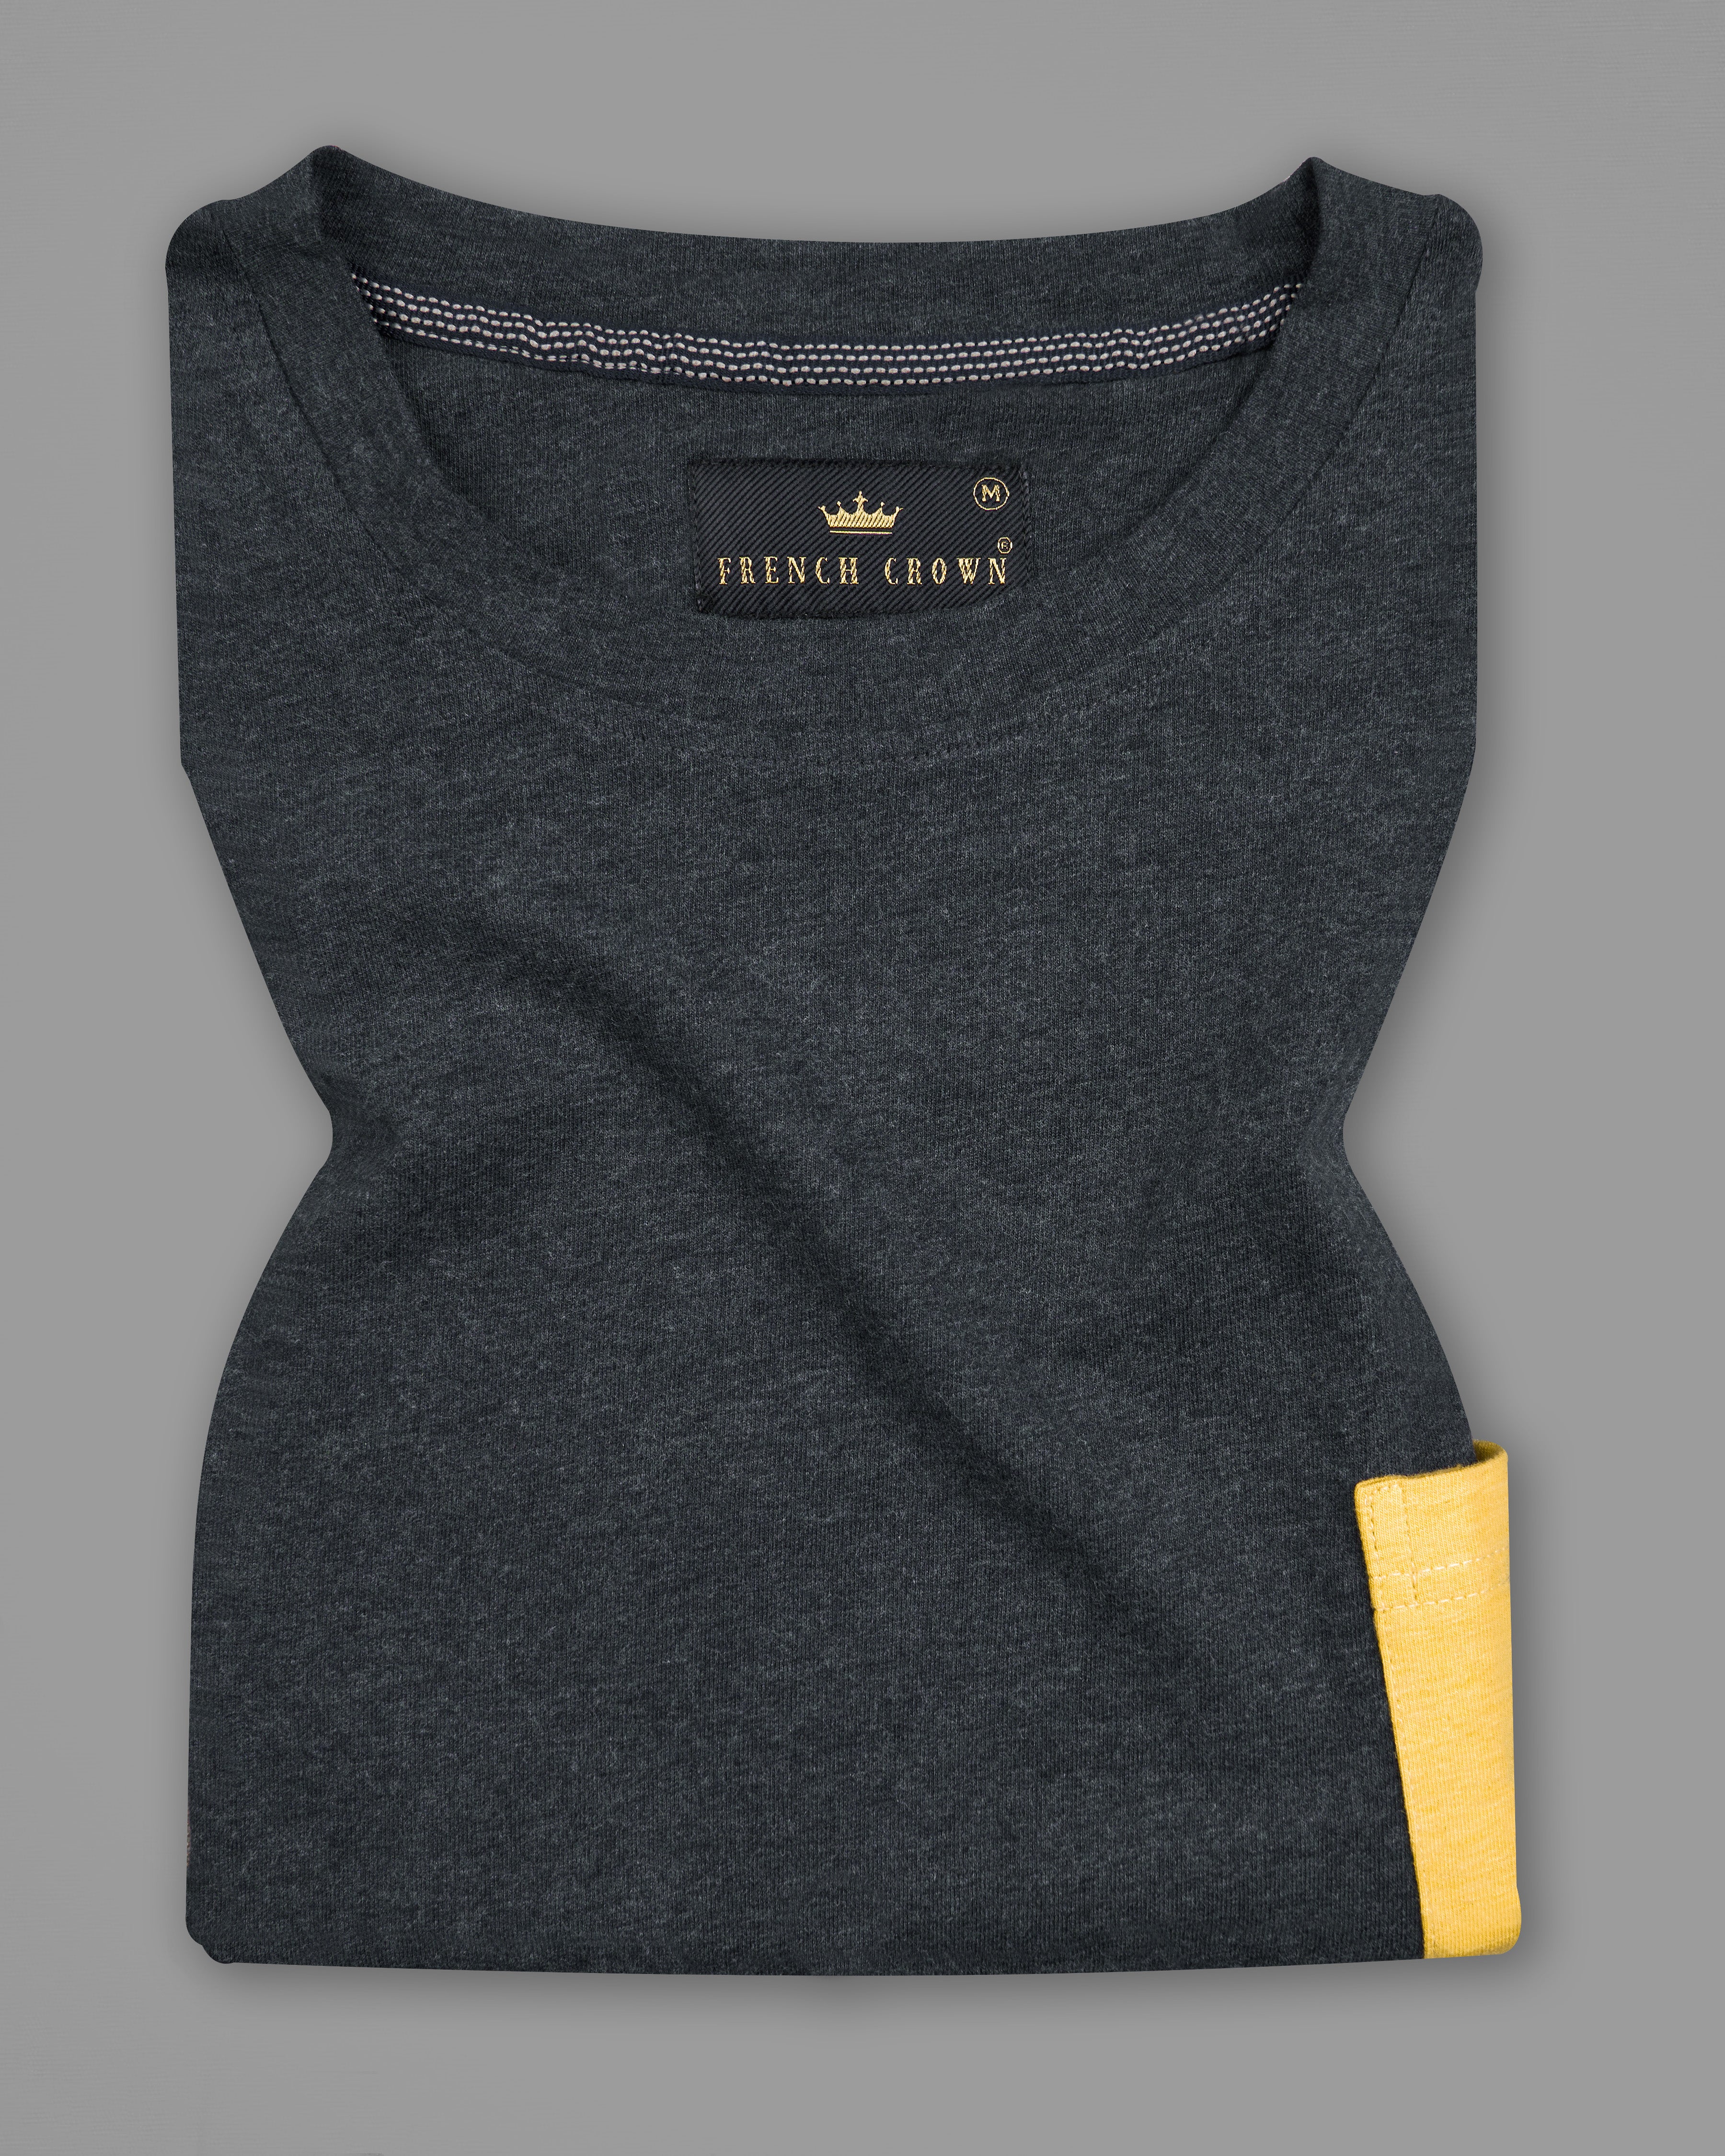 Gunmetal Gray and Marzipan Yellow Premium Cotton T-shirt TS848-S, TS848-M, TS848-L, TS848-XL, TS848-XXL